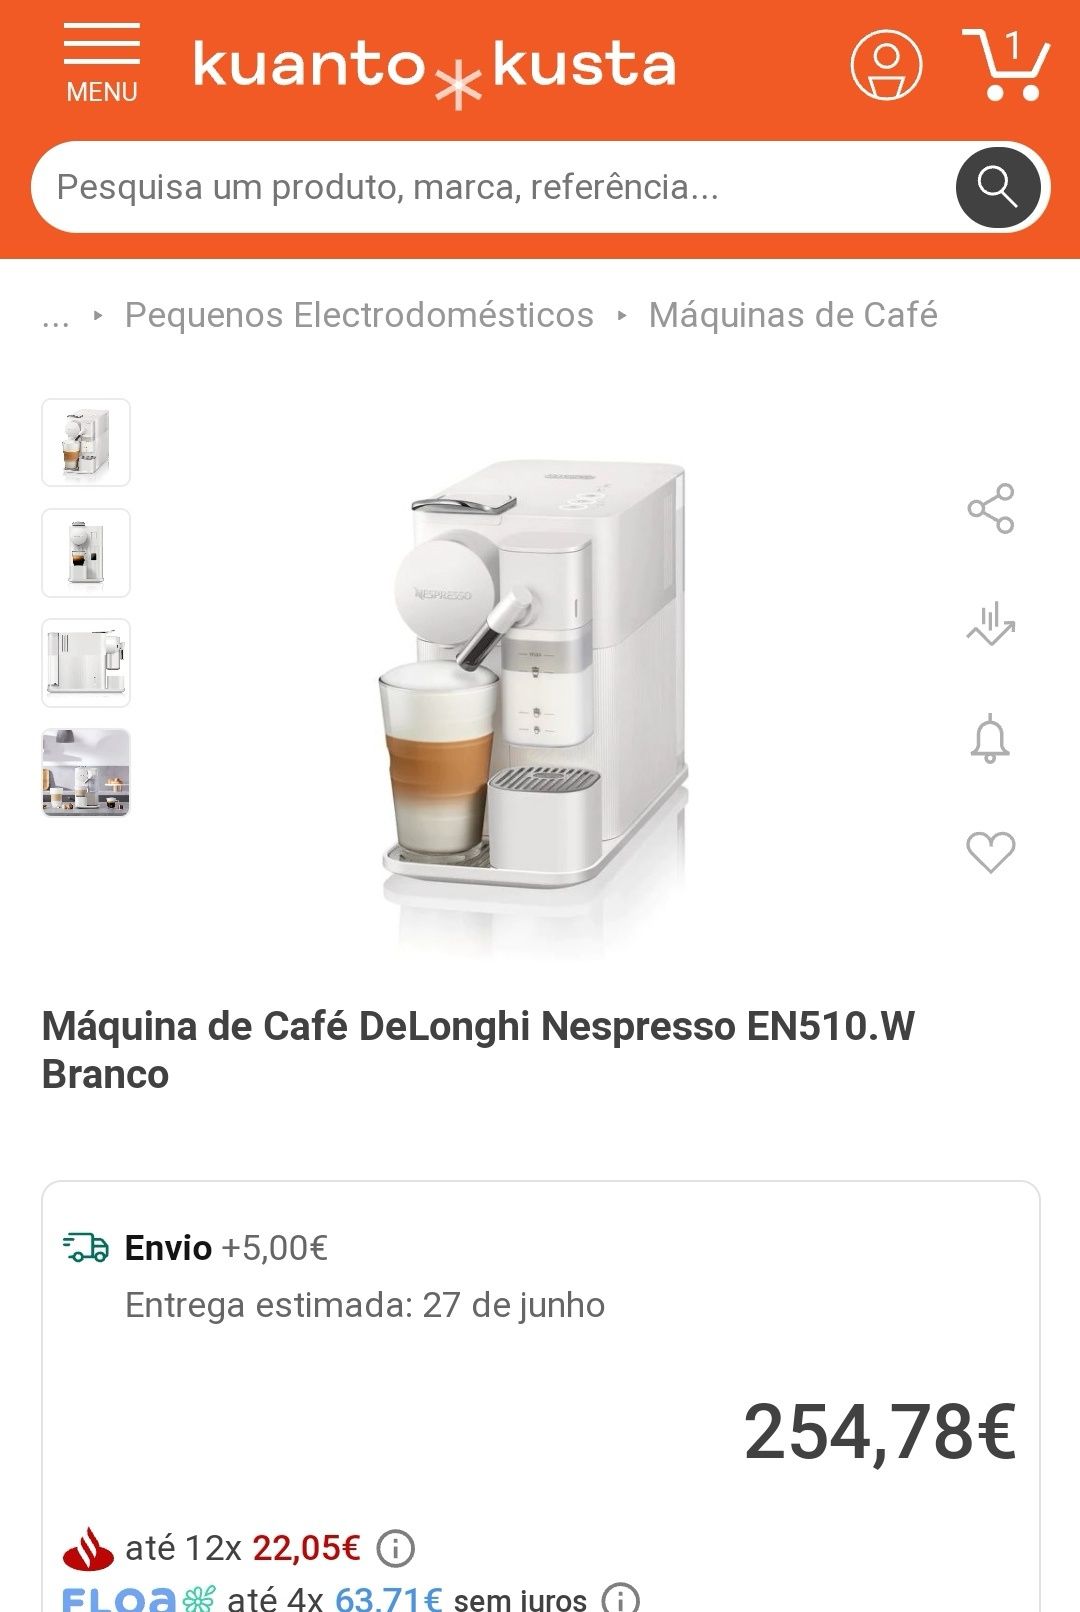 Maquina Nespresso DeLonghi